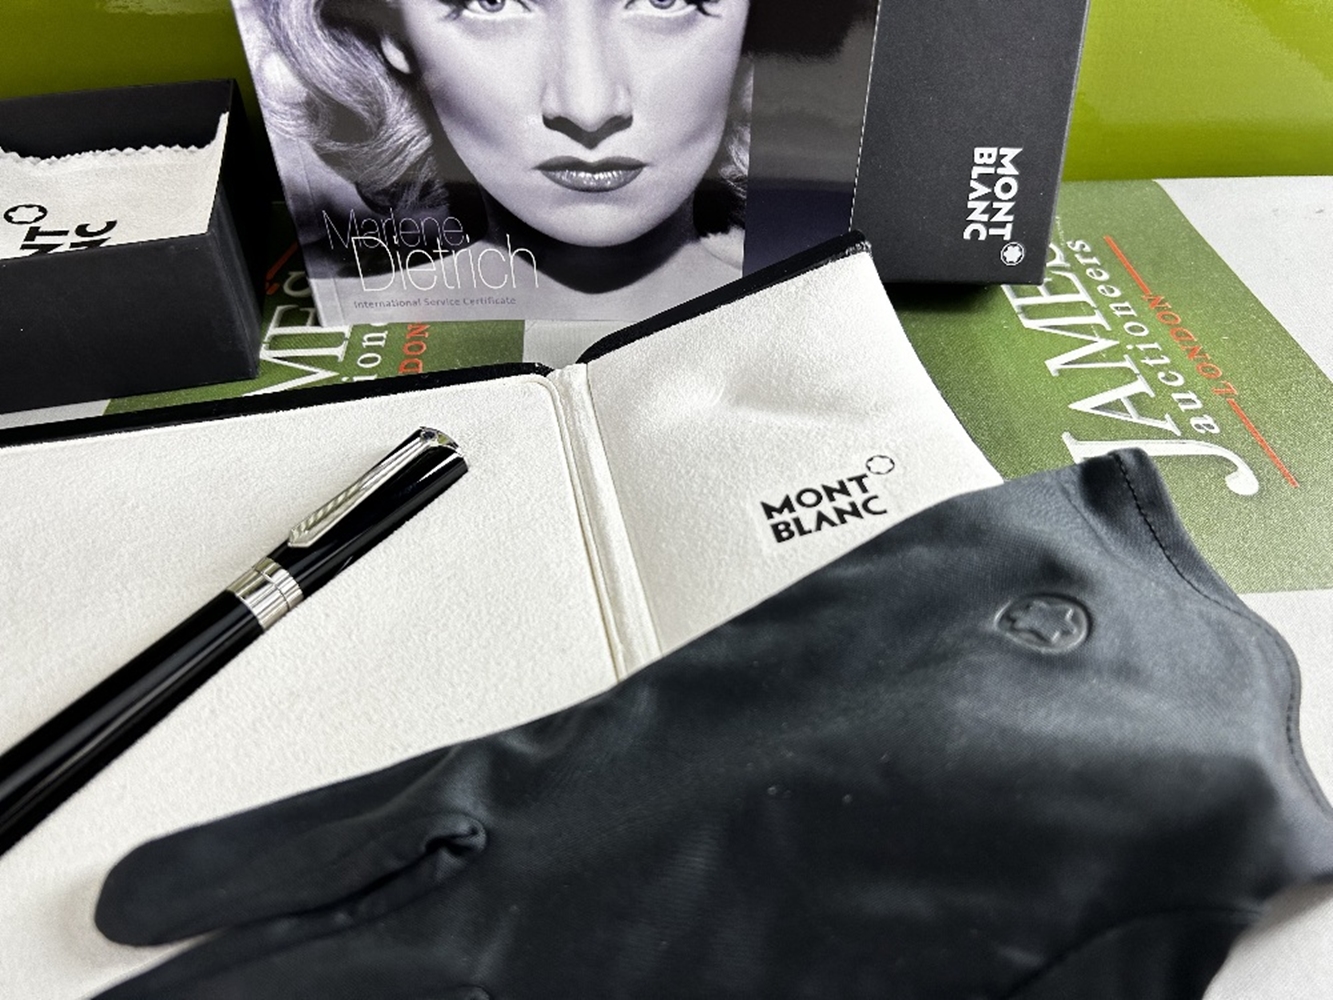 Montblanc Special Edition Marlene Dietrich Fountain Pen-18k Nib - Image 6 of 7